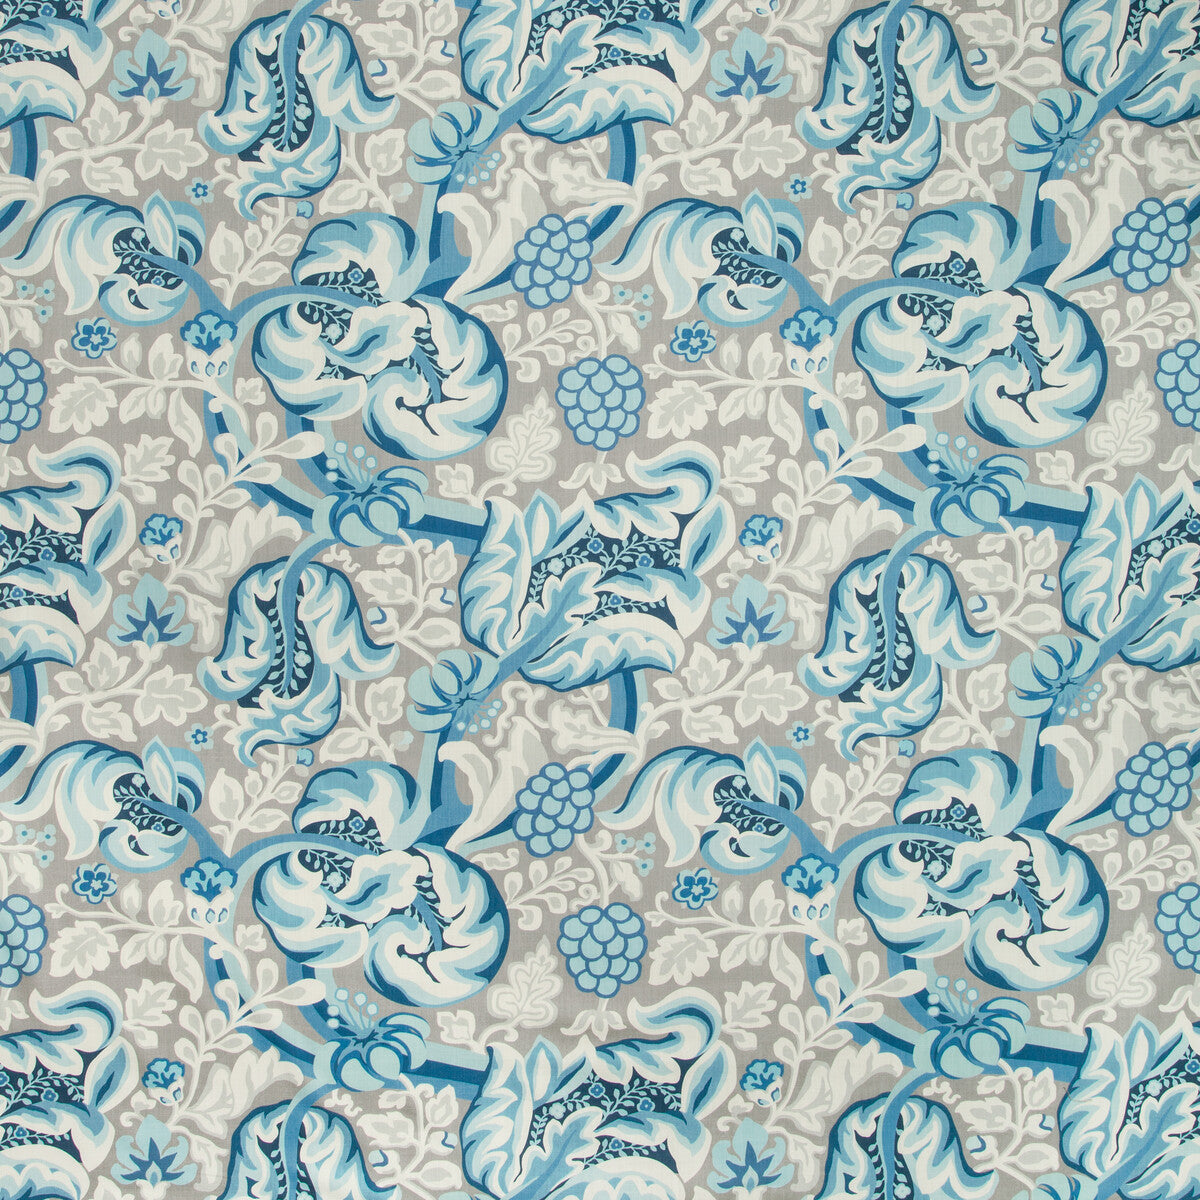 Hullabaloo fabric in atlantic color - pattern HULLABALOO.15.0 - by Kravet Basics in the Bermuda collection